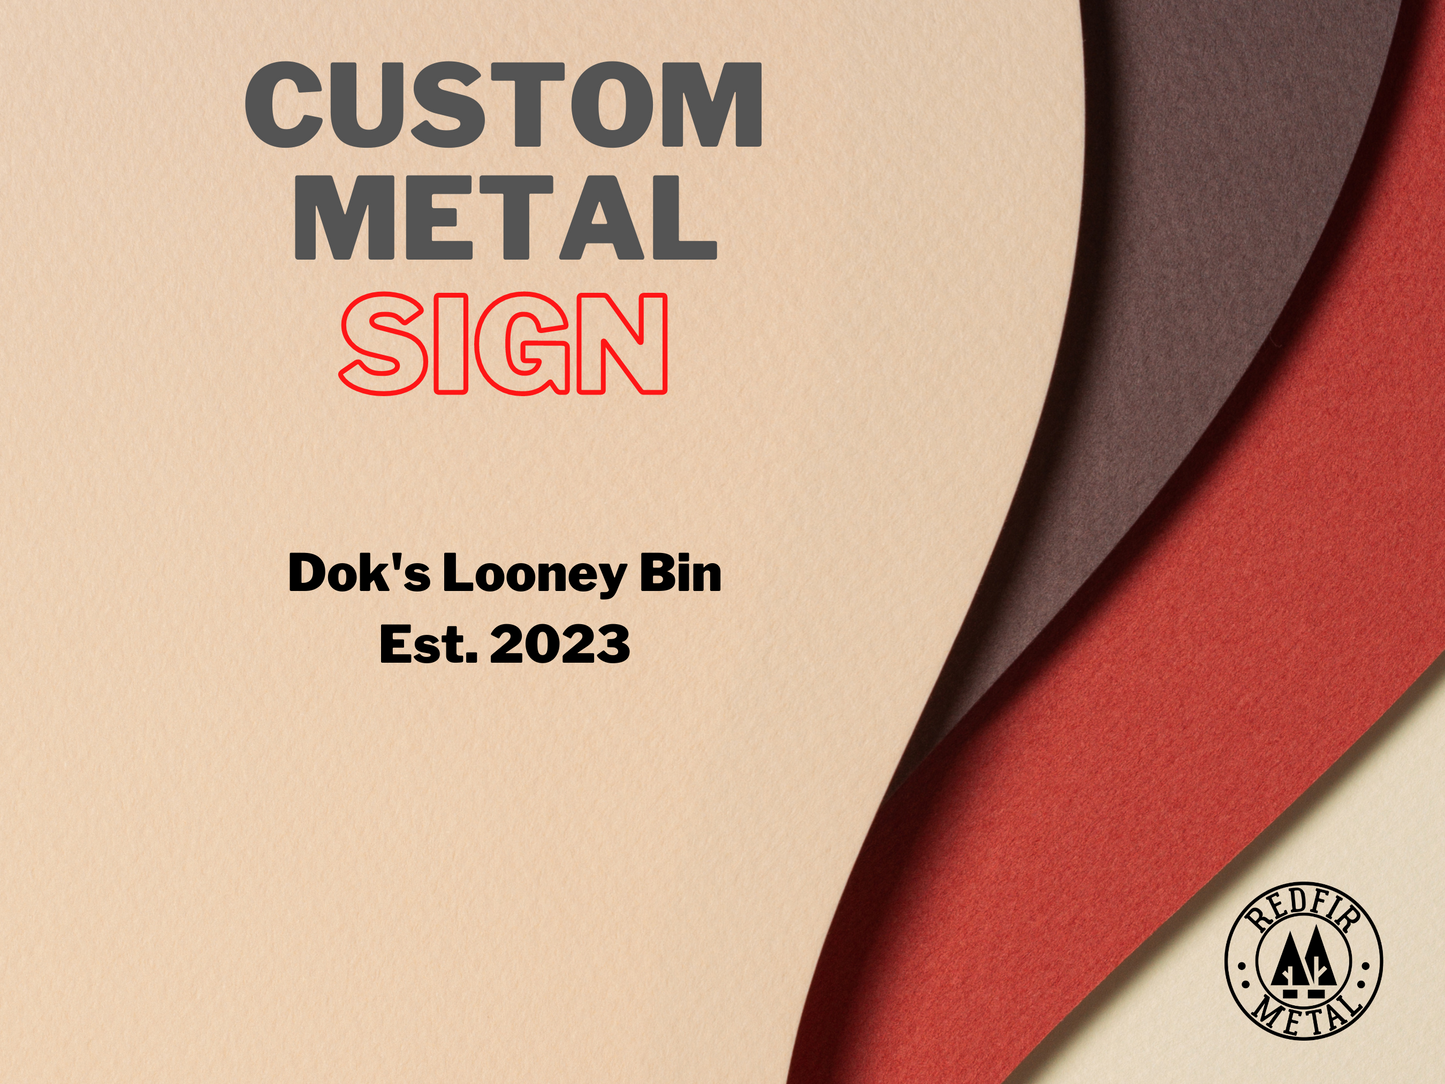 Custom Metal Sign, Dok's Looney Bin